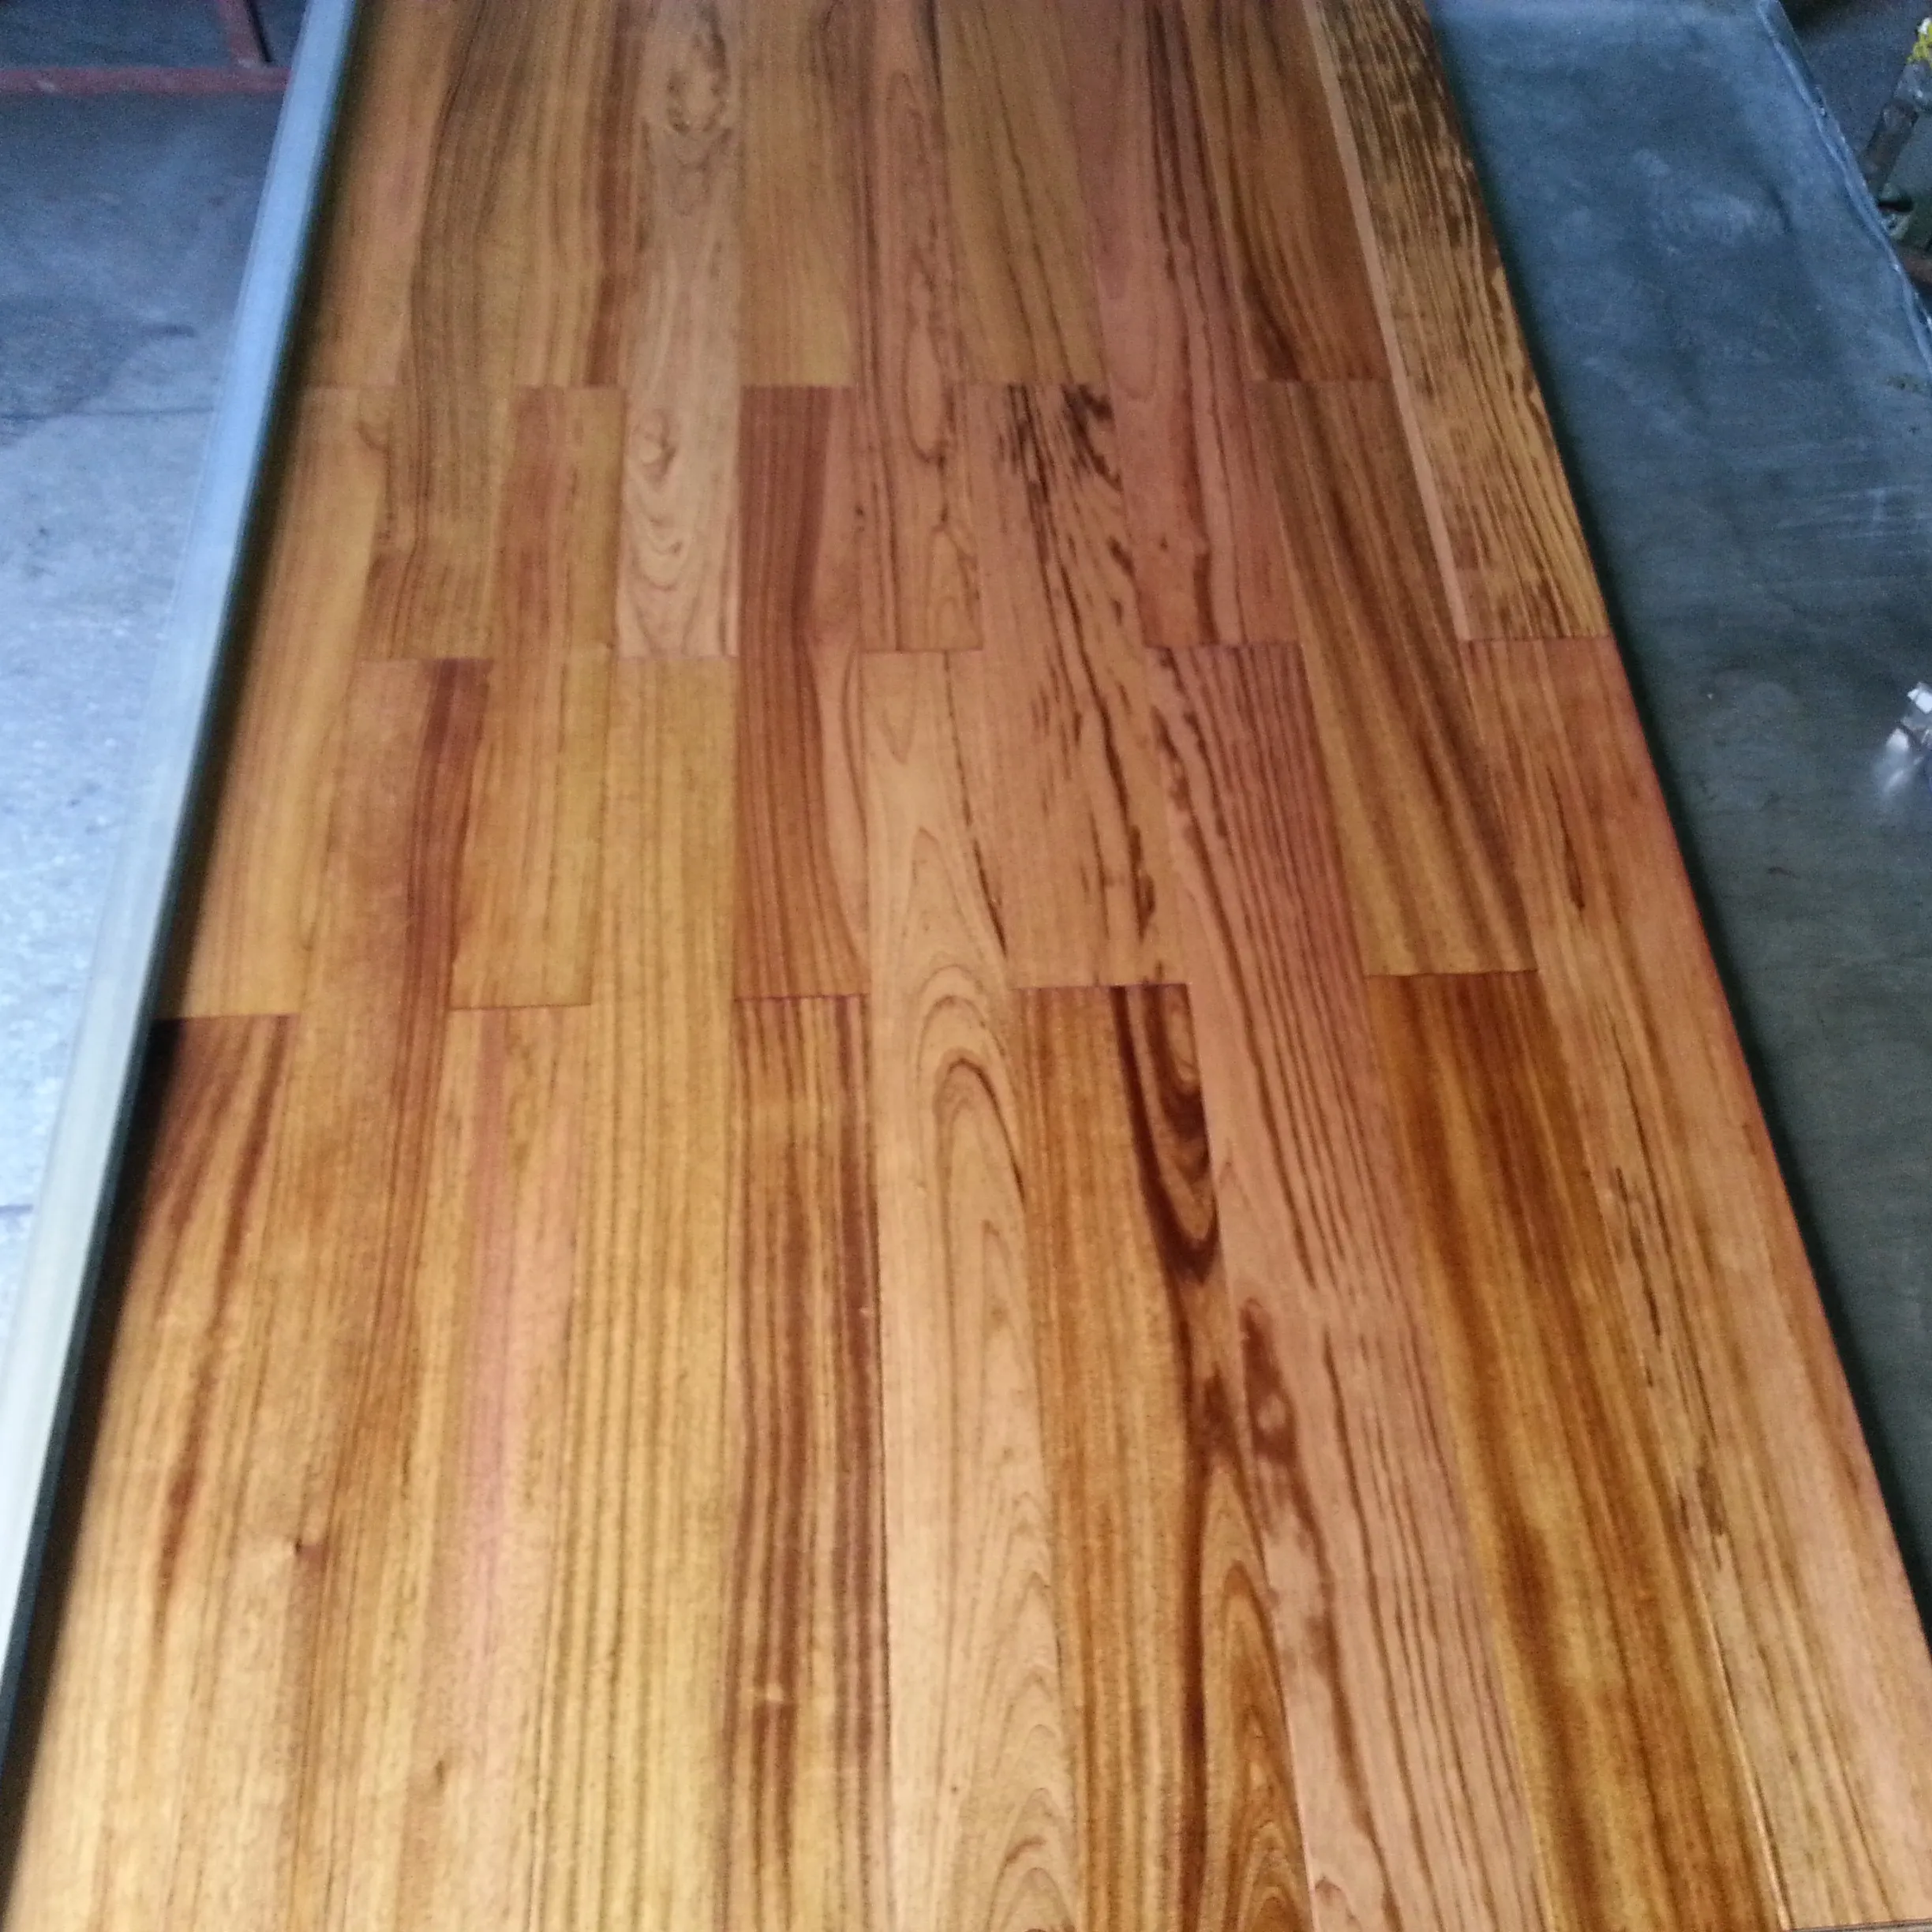 SEPETIR tarimas de madera maciza/pisos de madera dura/piso interior